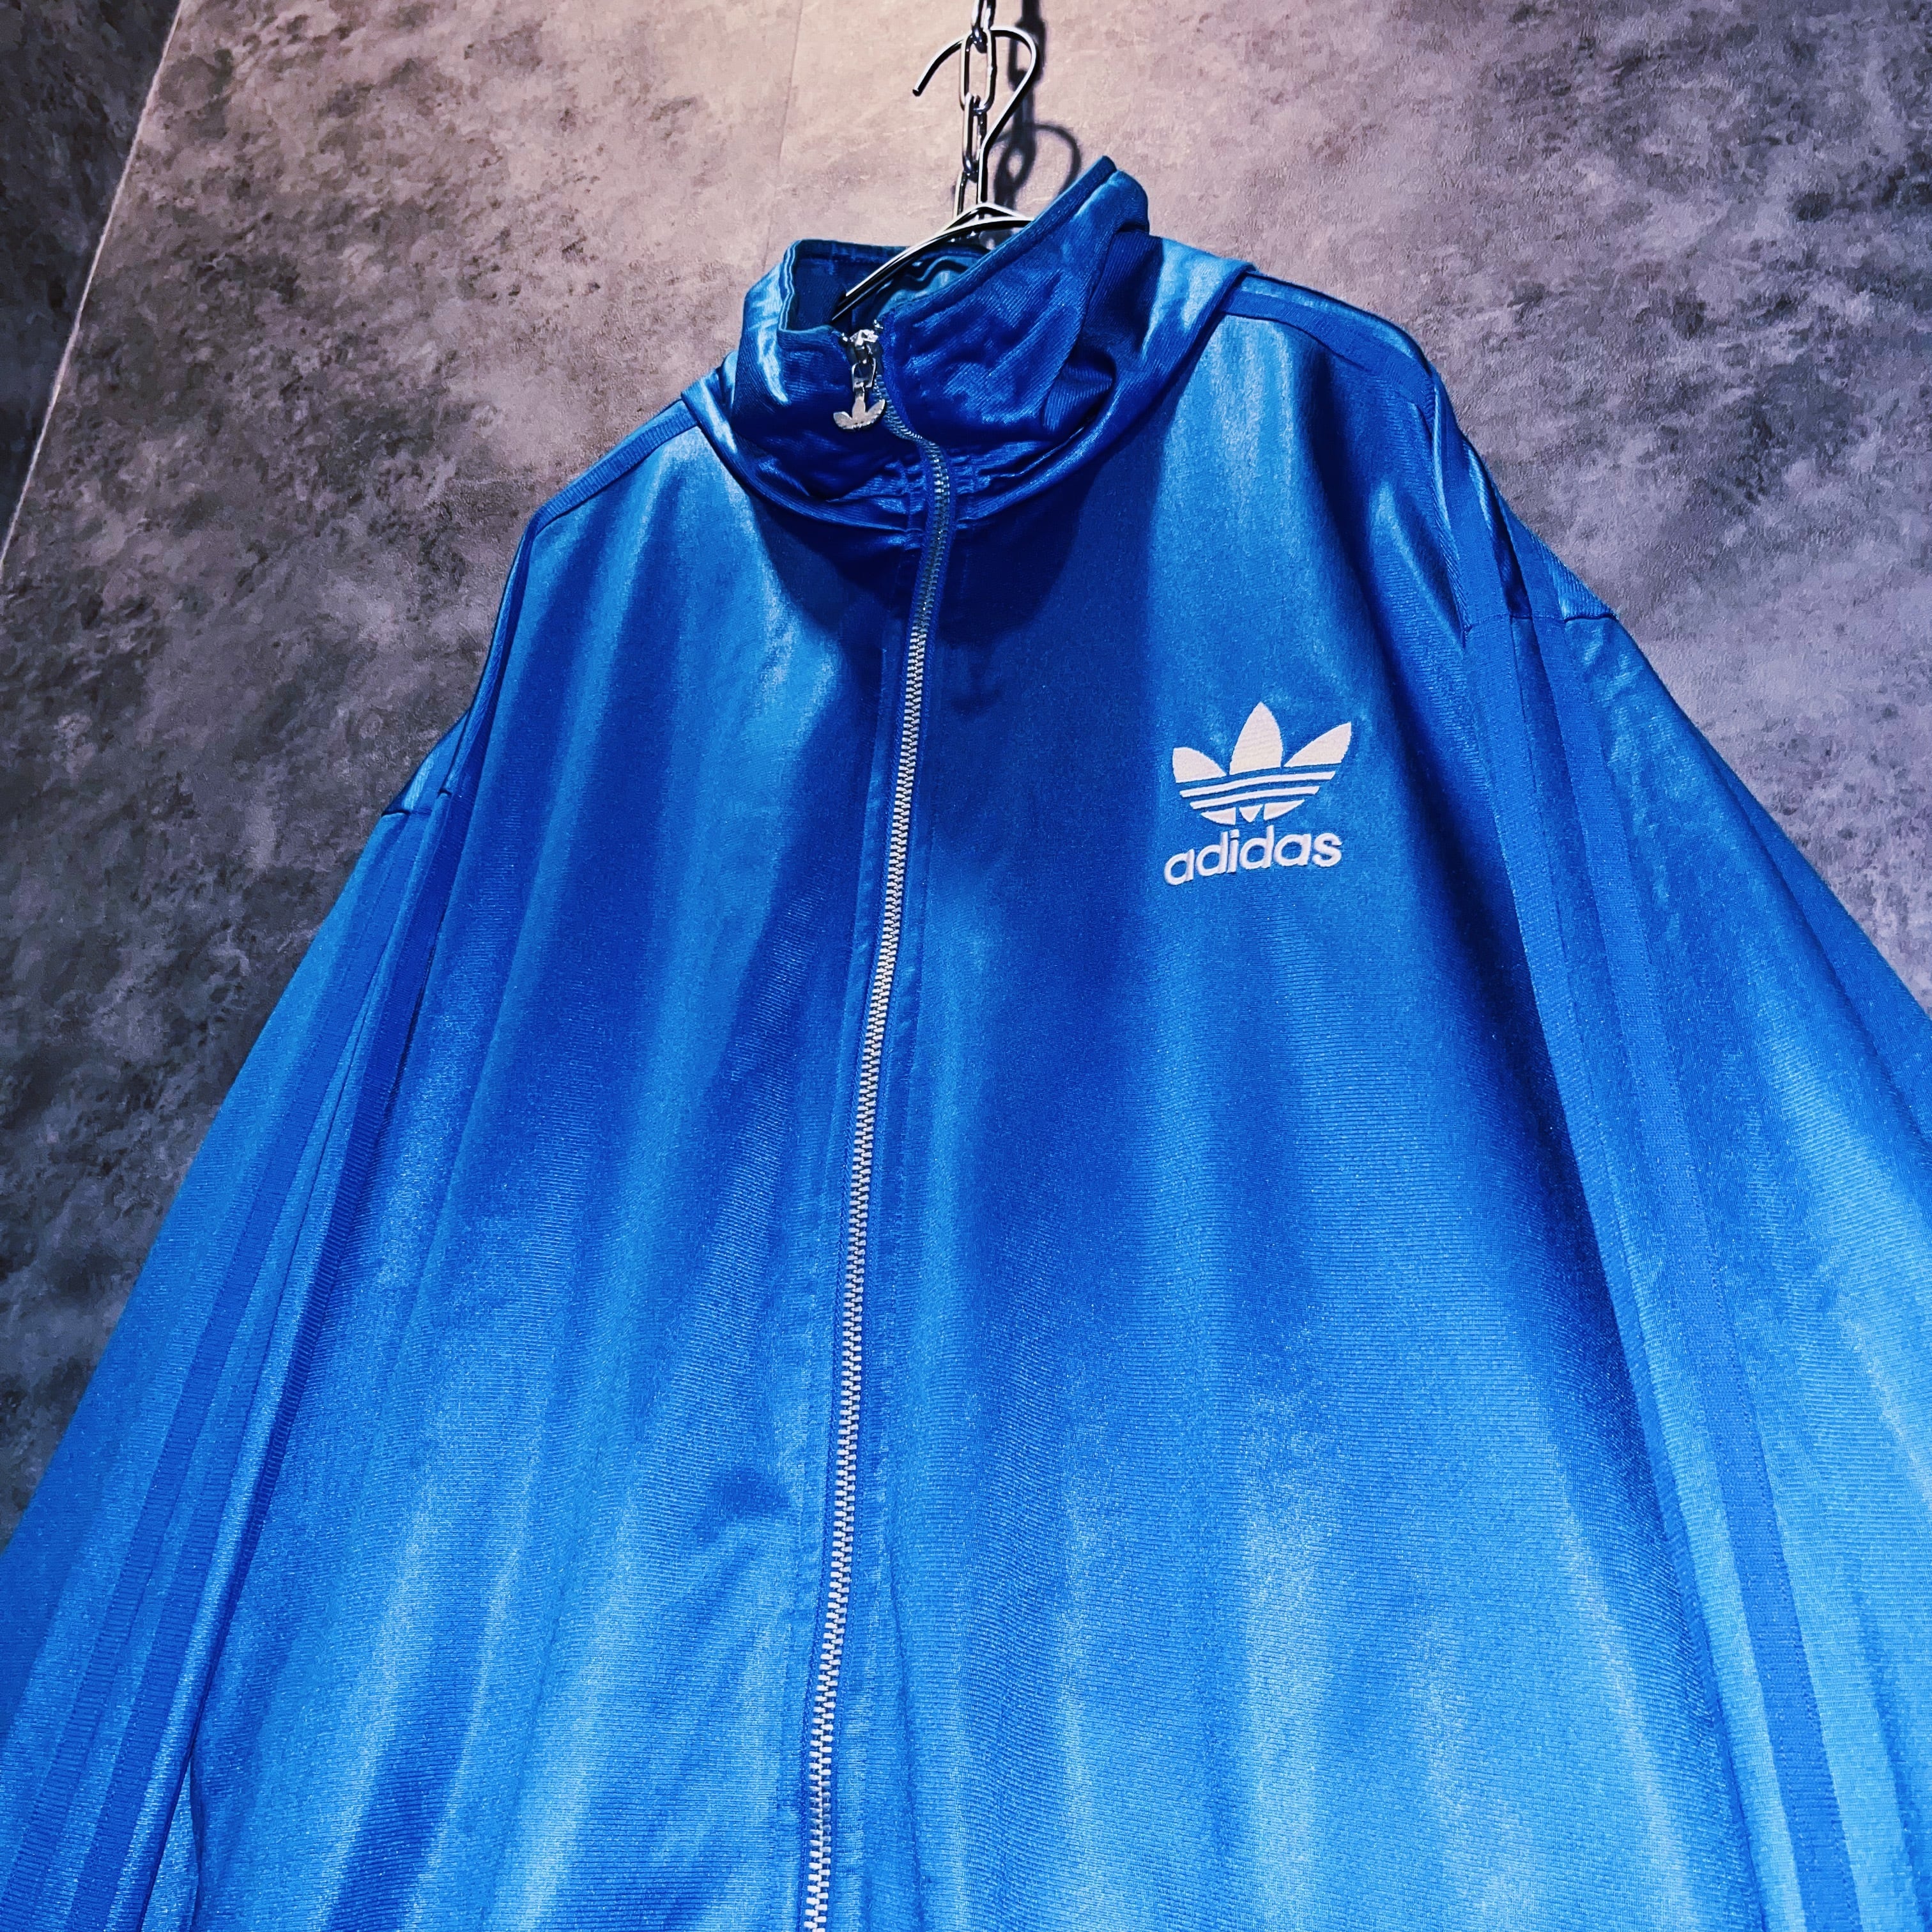 doppio】"adidas Originals chile62" Foot locker track jacket | ayne